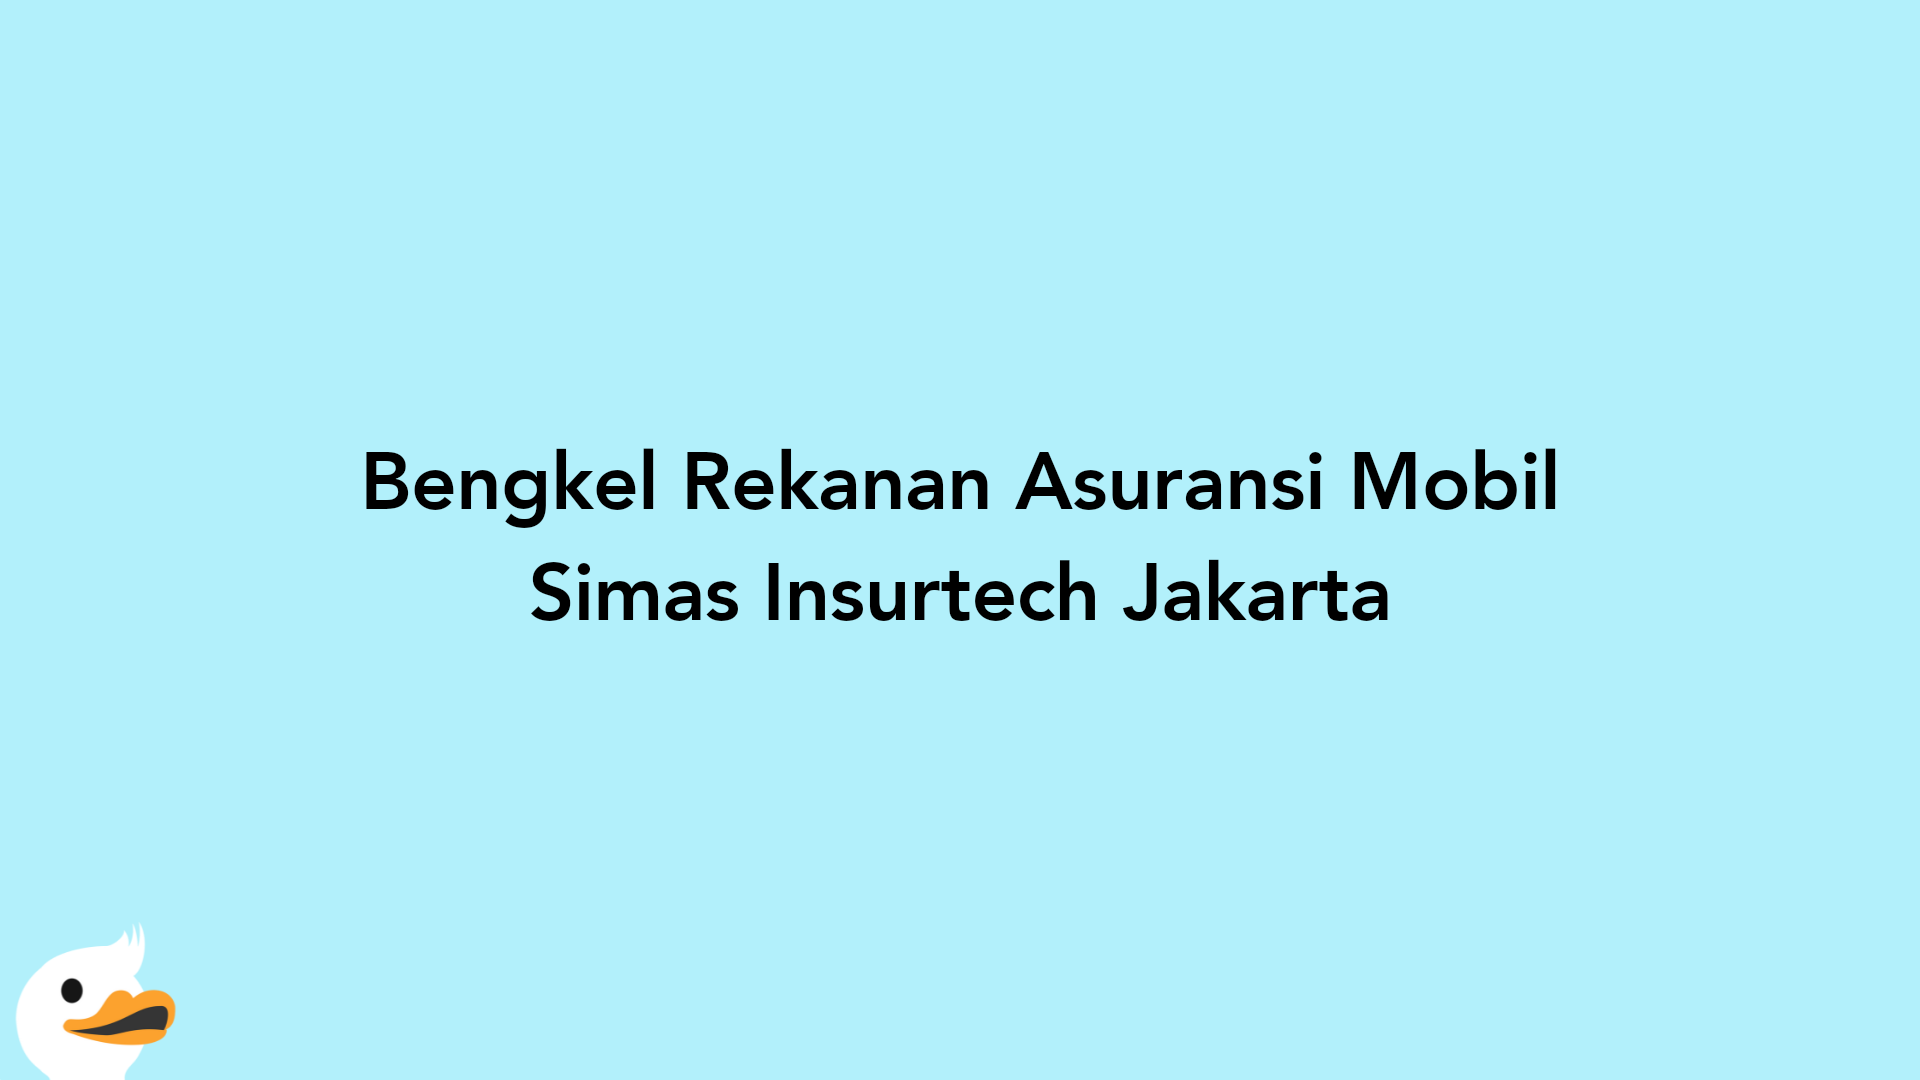 Bengkel Rekanan Asuransi Mobil Simas Insurtech Jakarta